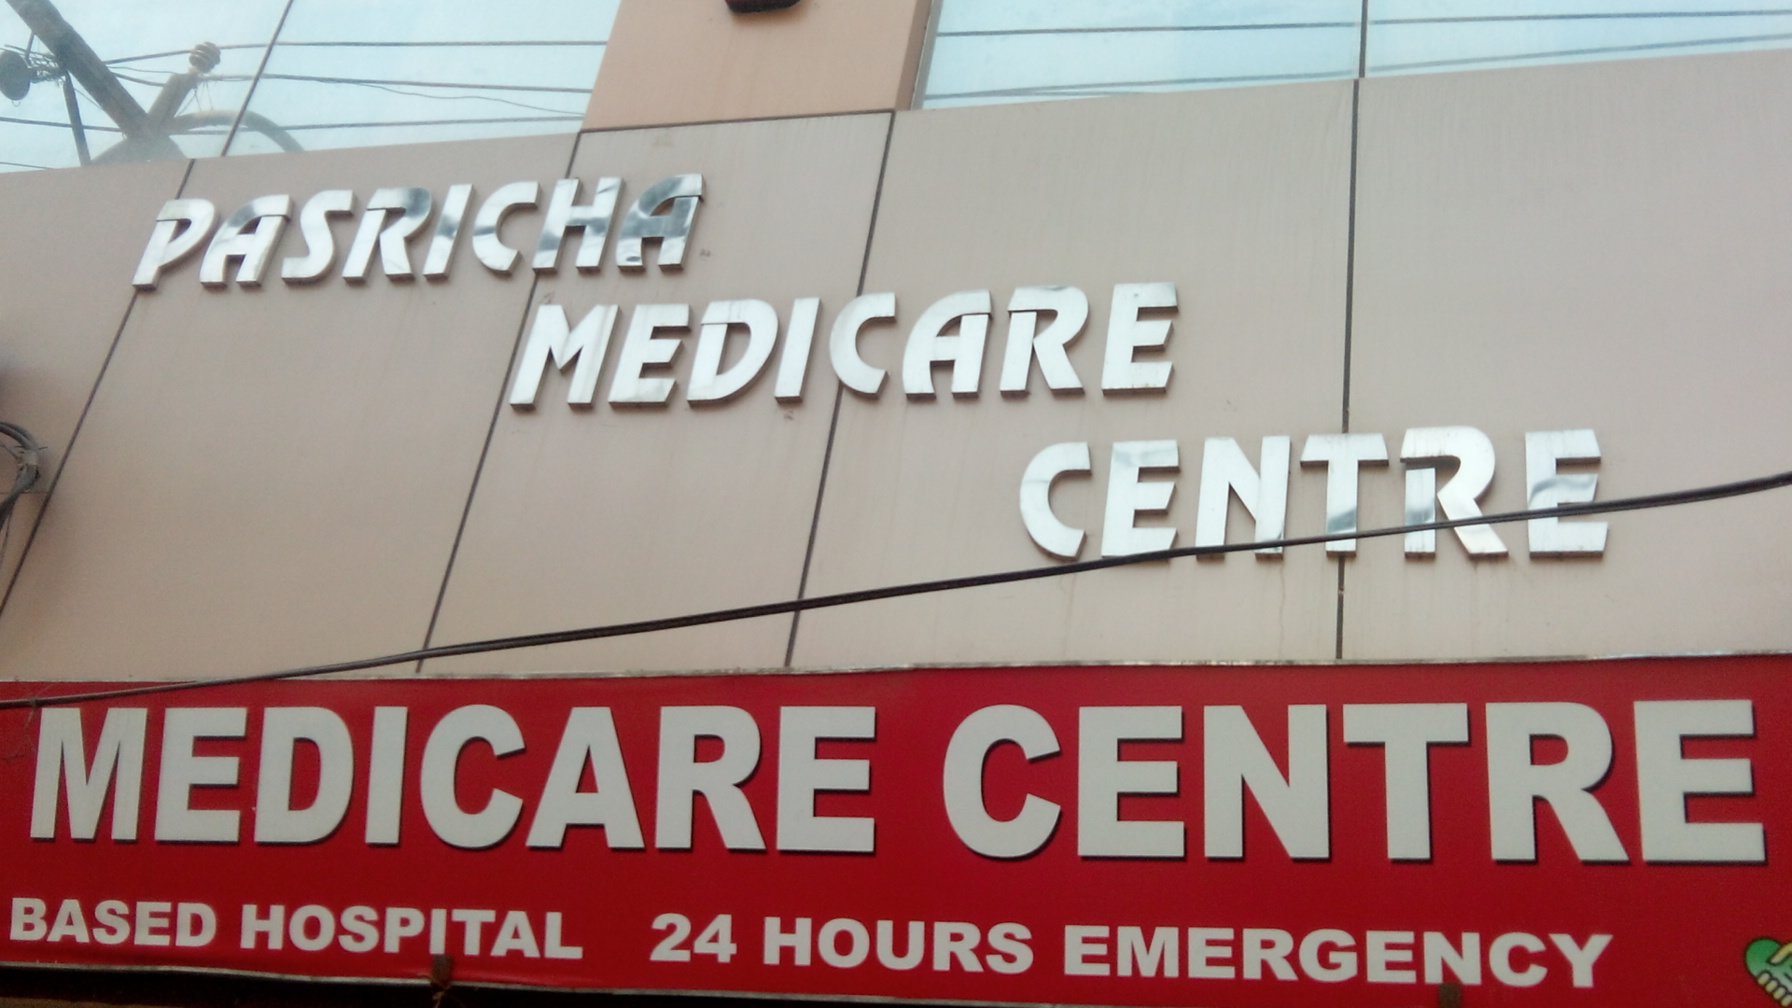 Pasricha Medicare Centre